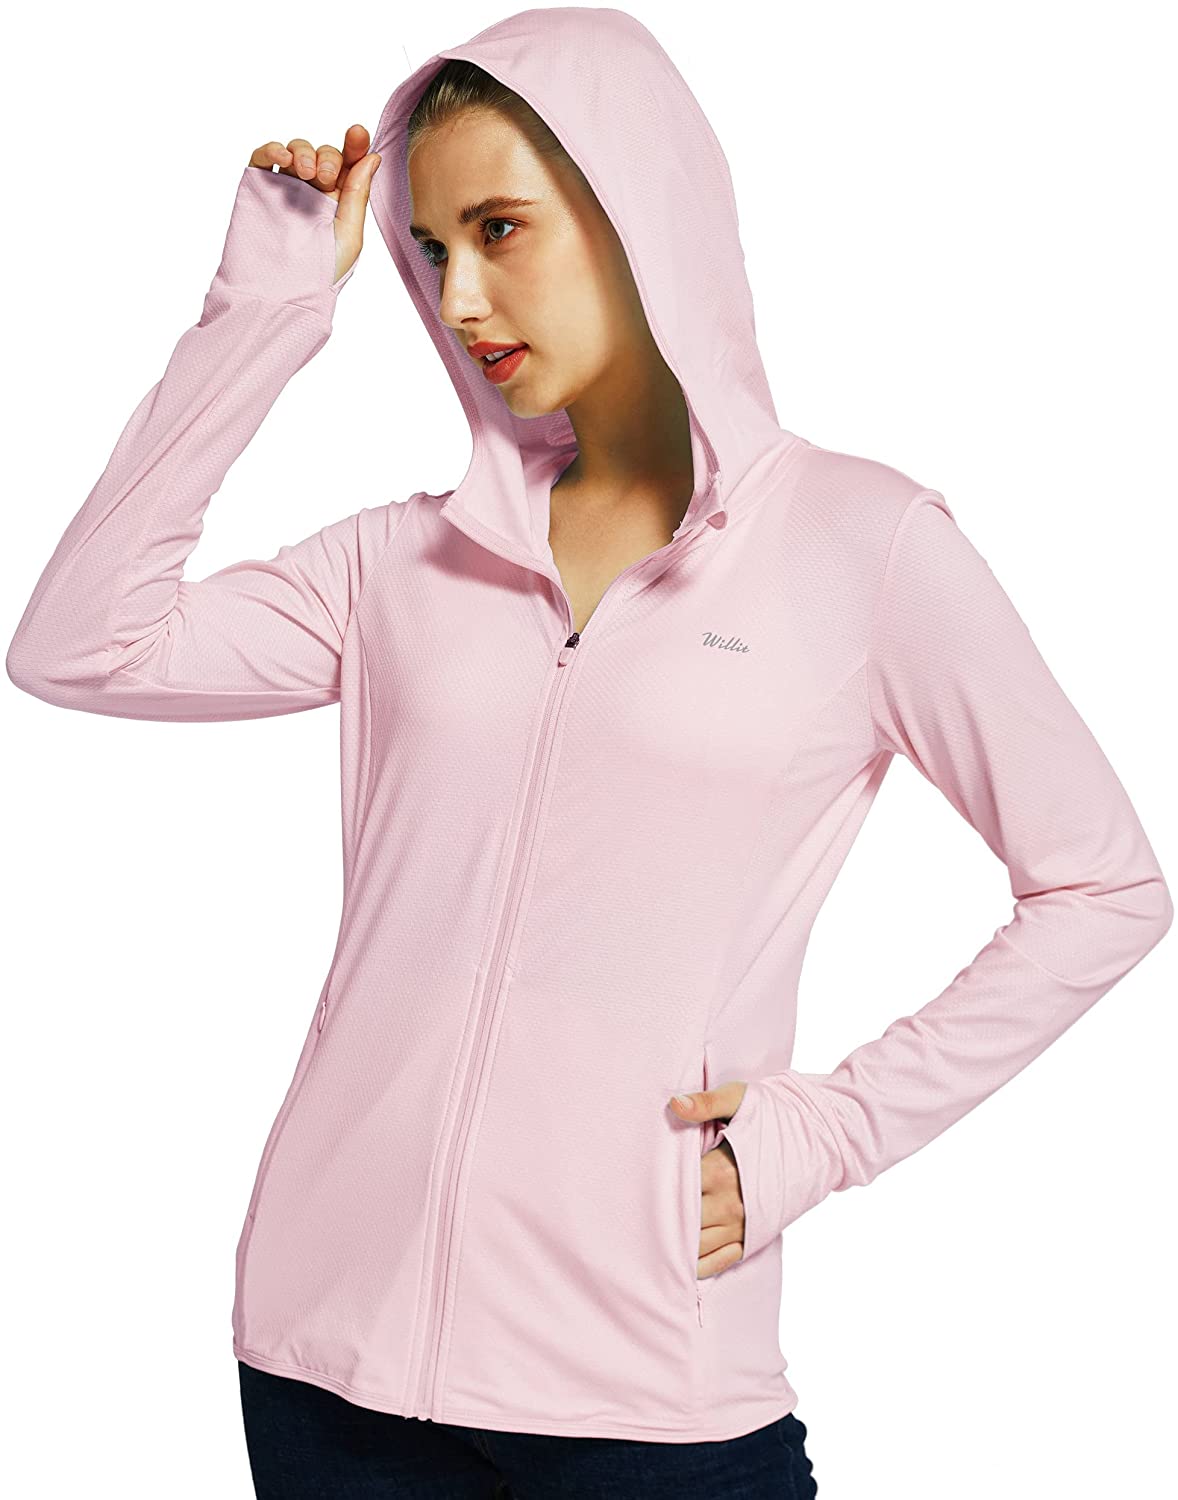 Willit Women's UPF 50 Sun Protection Hoodie SPF Shirt Long Sleeve Hiking Fishing Outdoor Shirt Lightweight Hoodie